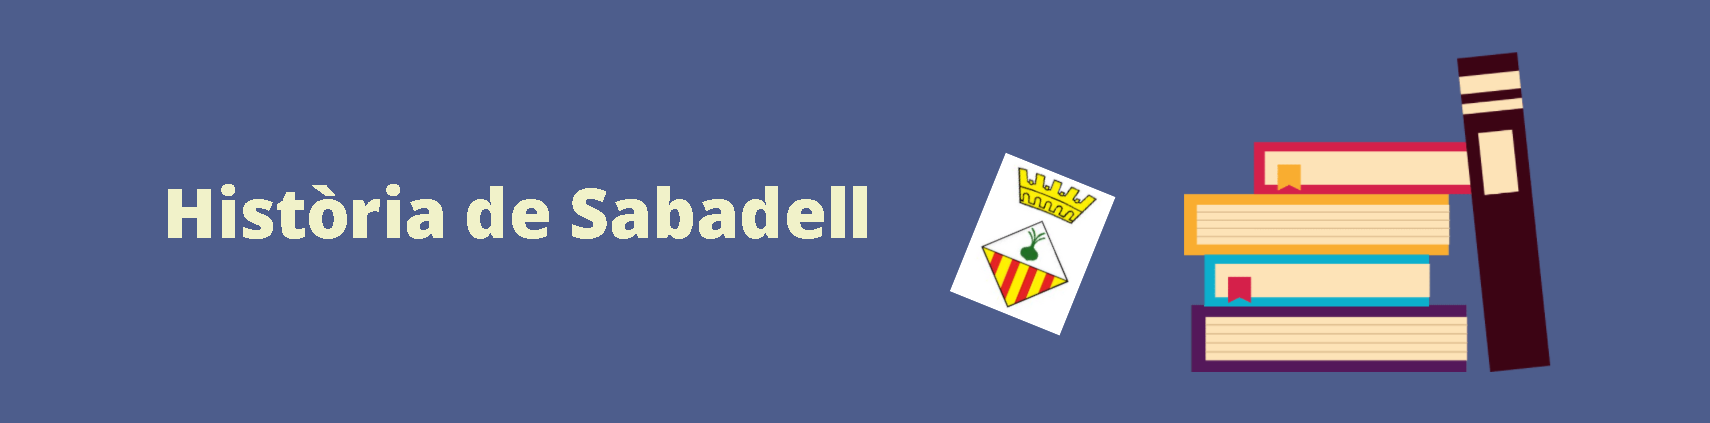 Història de Sabadell